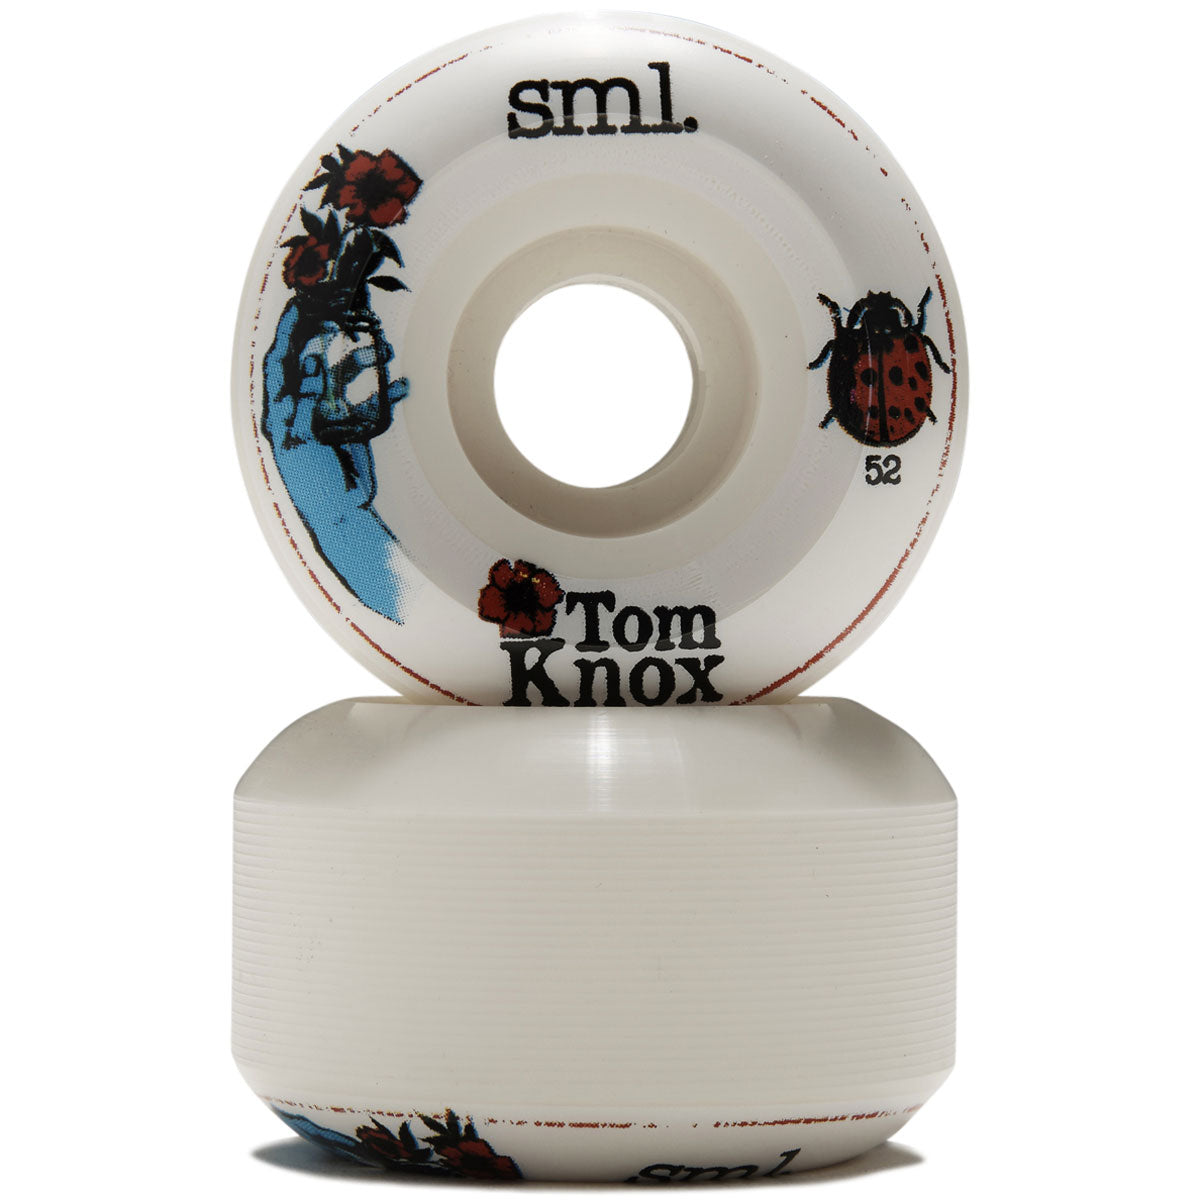 SML Lucidity Tom Knox Skateboard Wheels - 52mm image 2